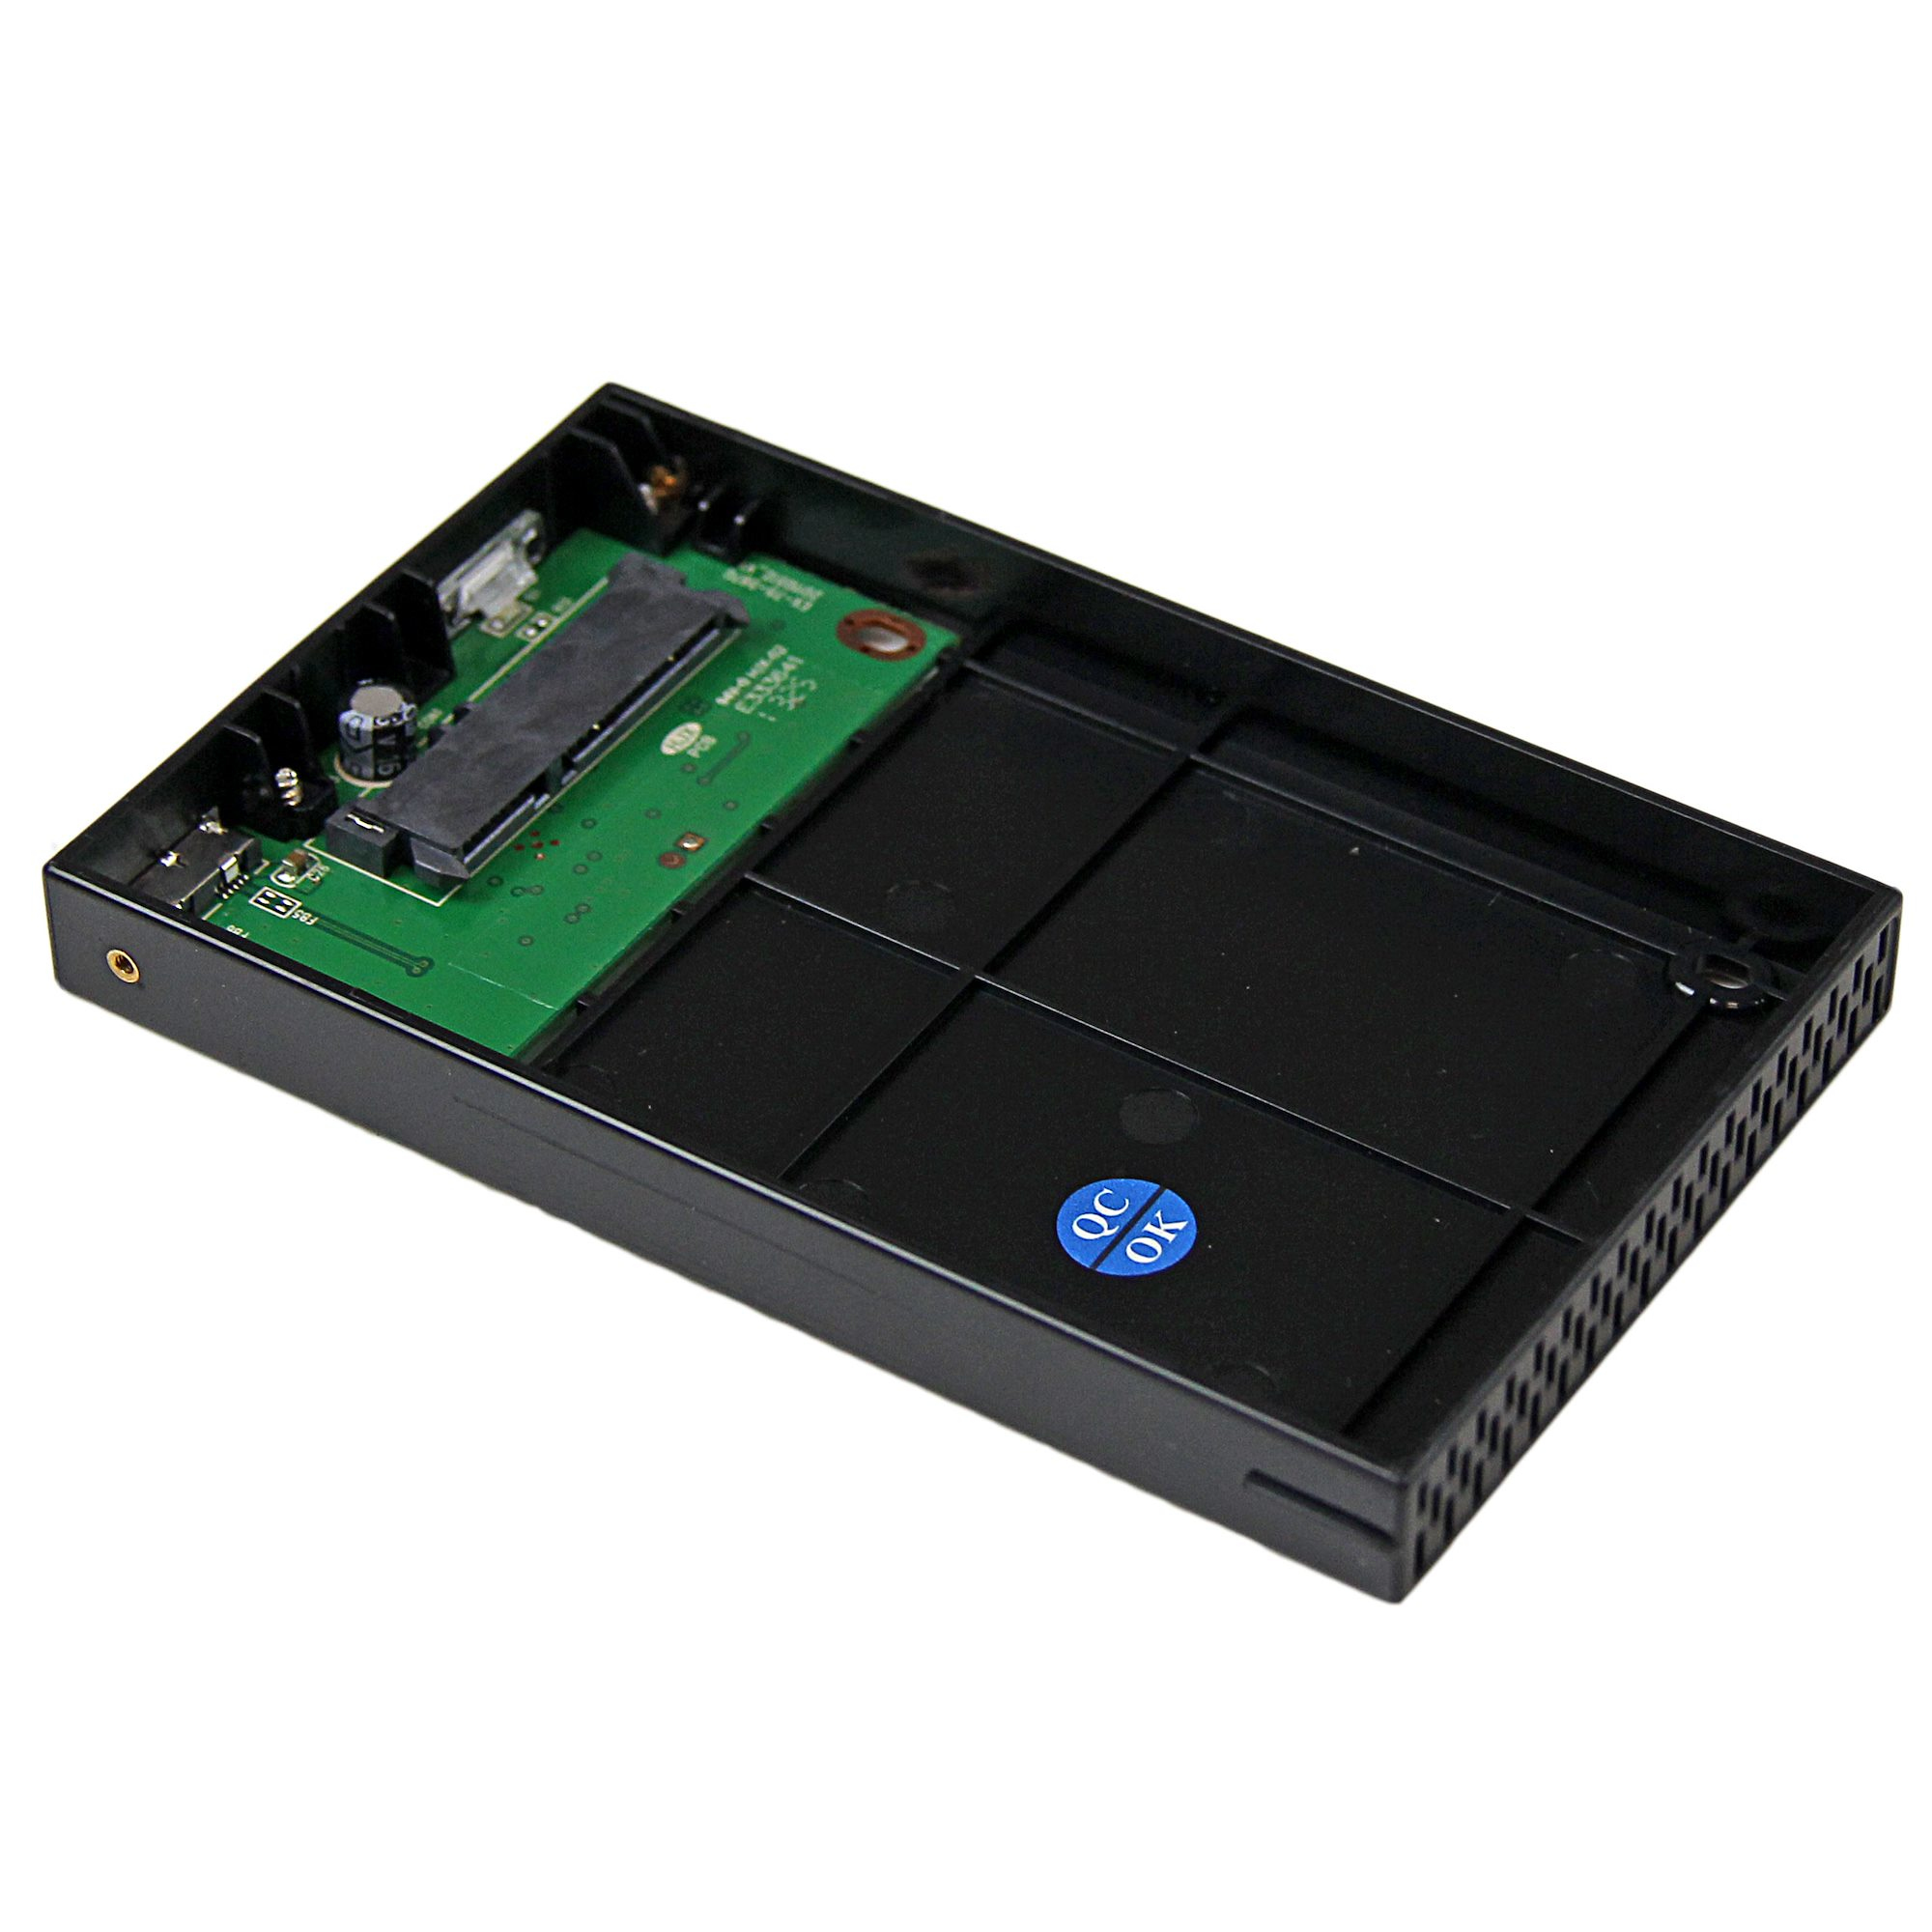 StarTech.com Externes 2,5 SATA III 6 GB/s SSD USB 3.0 SuperSpeed Festplattengehäuse mit UASP - 2,5 Zoll (6,4cm)